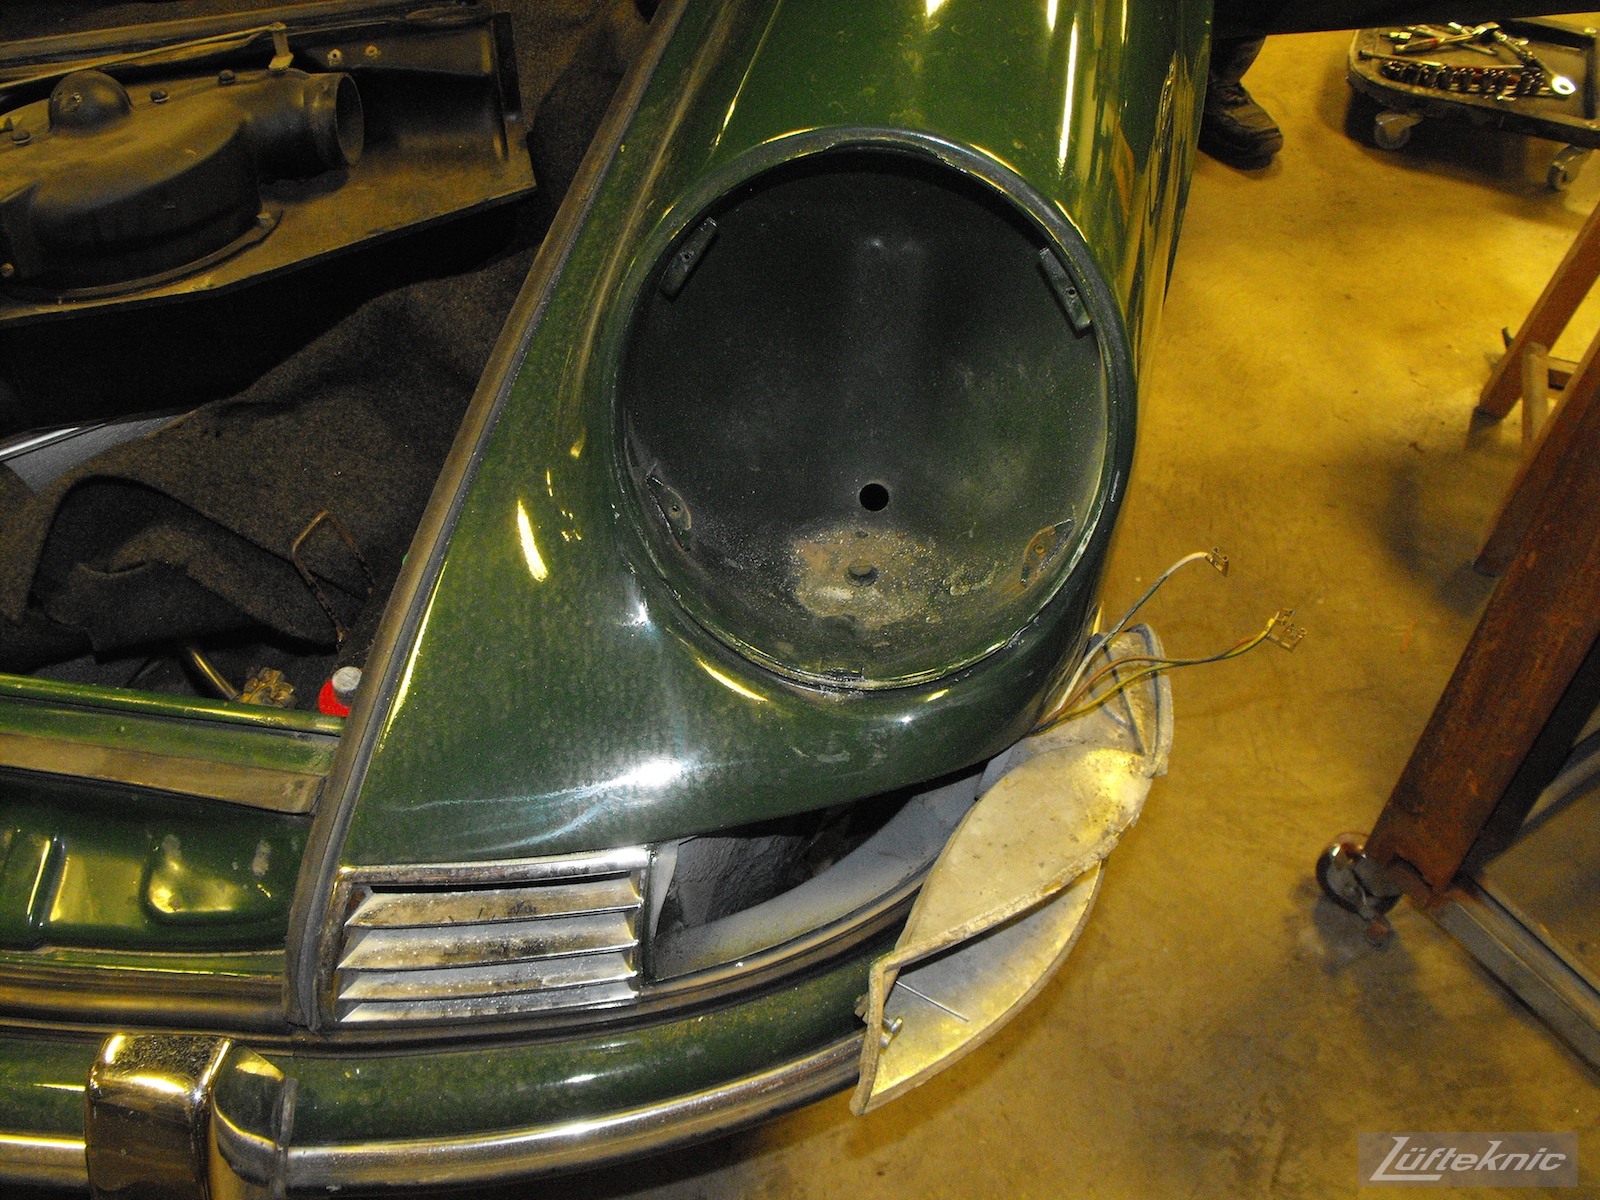 Front fender with lights removed on an Irish Green Porsche 912 undergoing restoration at Lufteknic.